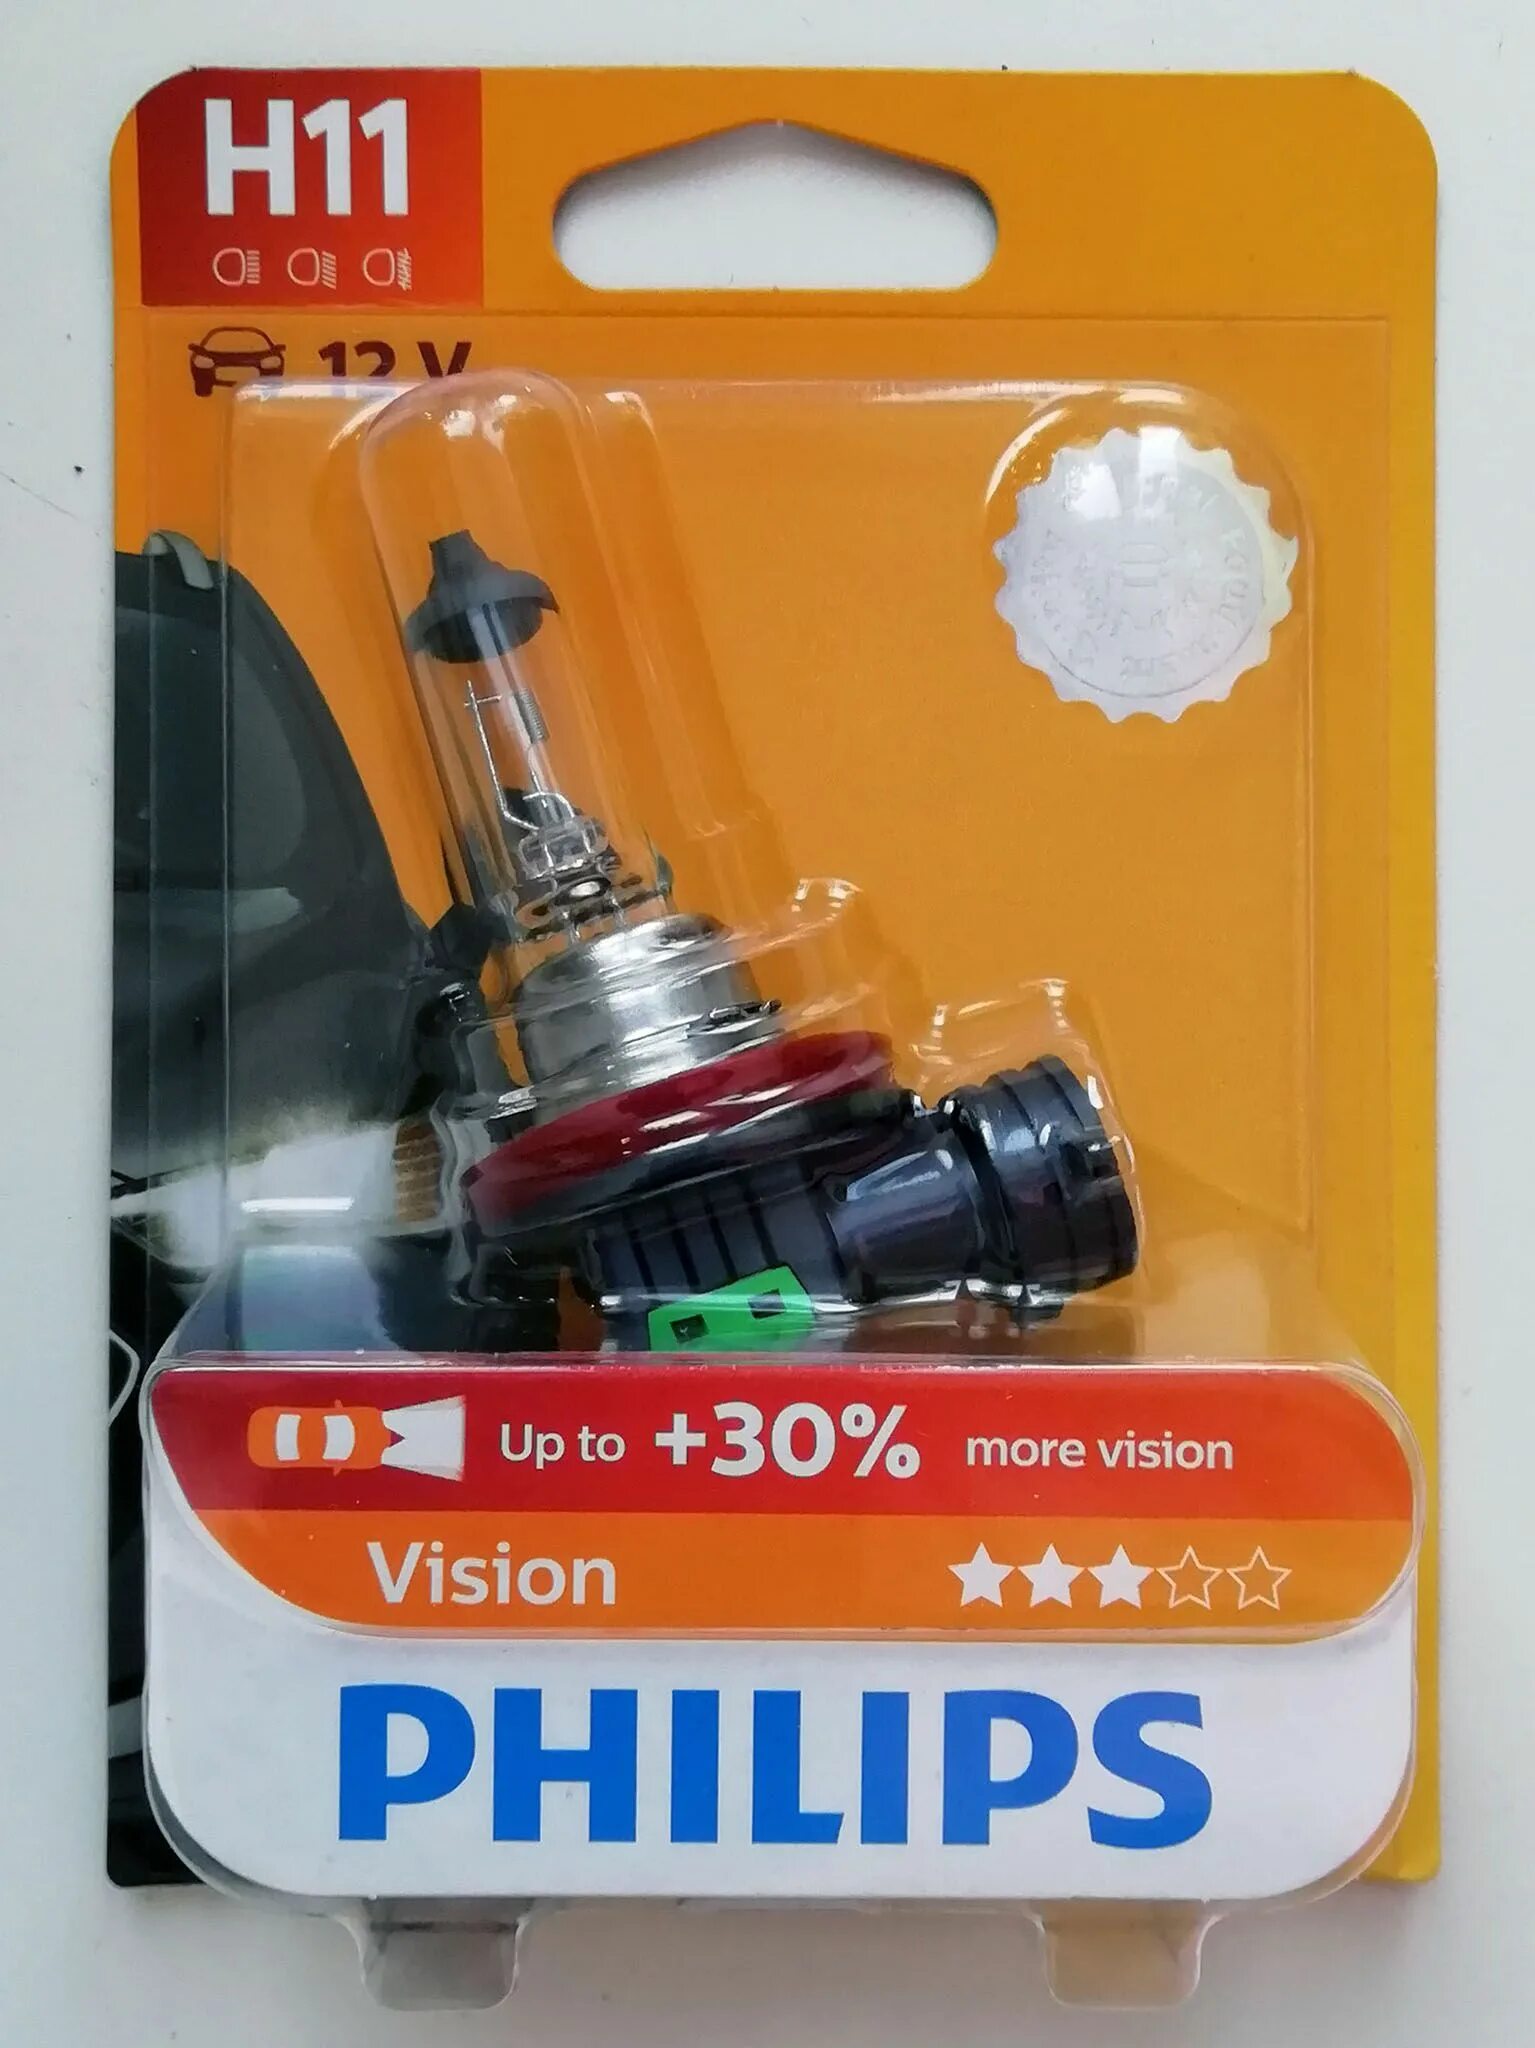 Philips 12362prb1, h11. Лампа Philips h11 12v 55w pgj19-2 b1 WHITEVISION. Лампа h11 55w +30% Vision Philips, 12362prb1. Philips Vision +30 h11.